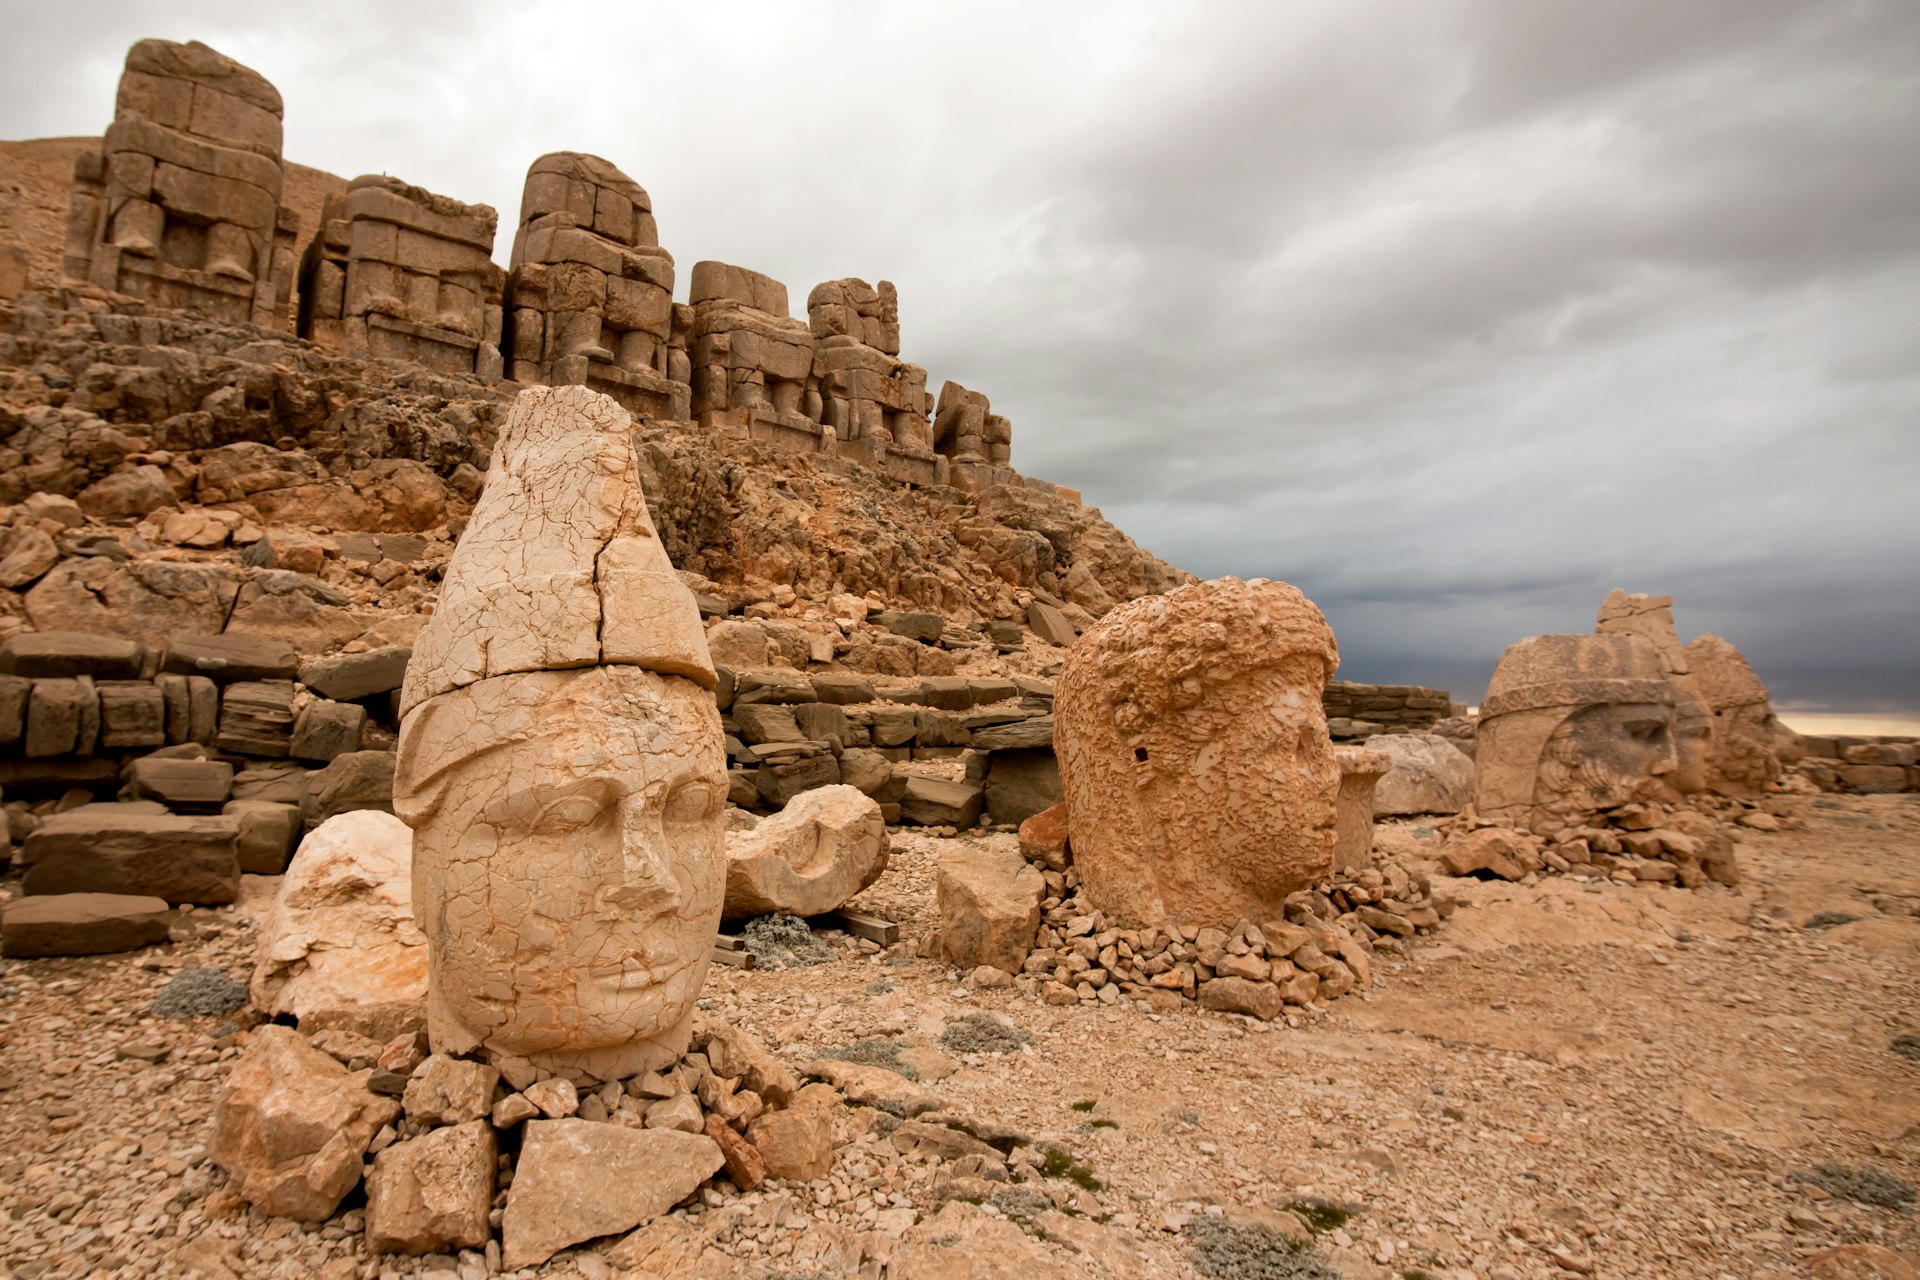 Nemrut Dağı ruins